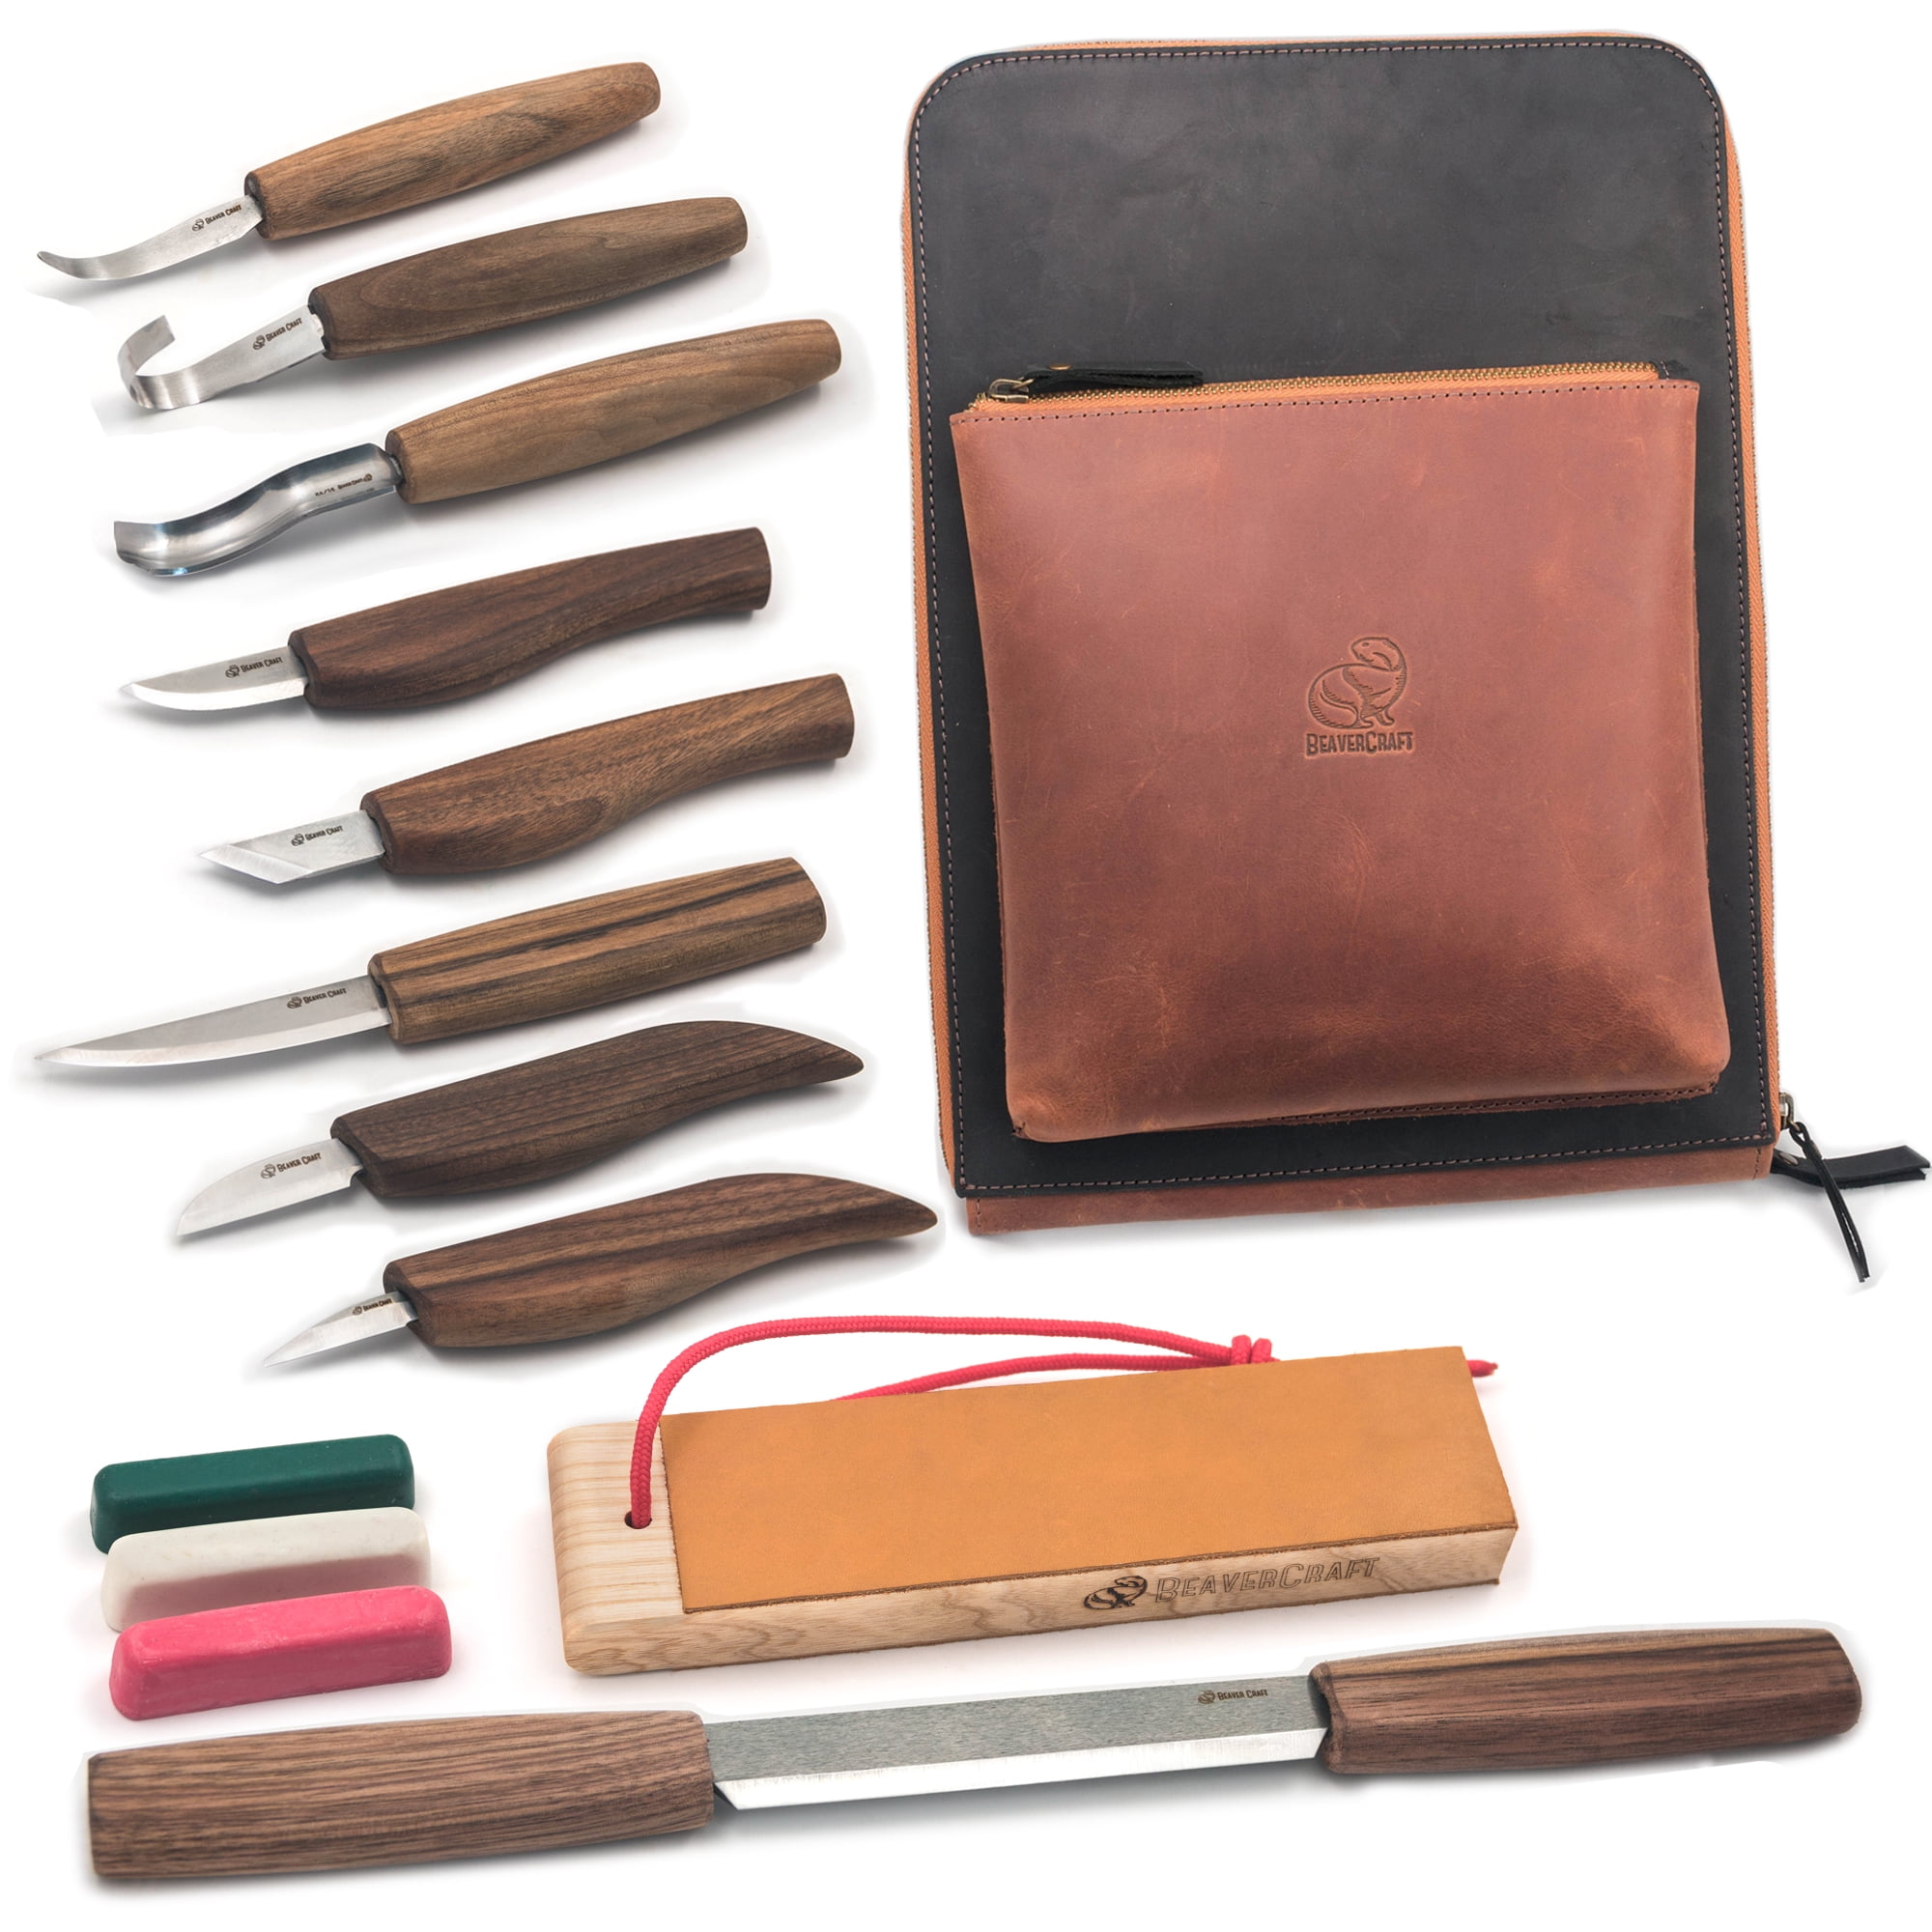 BeaverCraft, Deluxe Wood Carving Kit S50X - Wood Carving Tools Wood Carving  Set - Spoon Wood Carving Knives Tools Set - Whittling Kit Knife Woodworking  Kit for Beginner and Profi (Brown) 